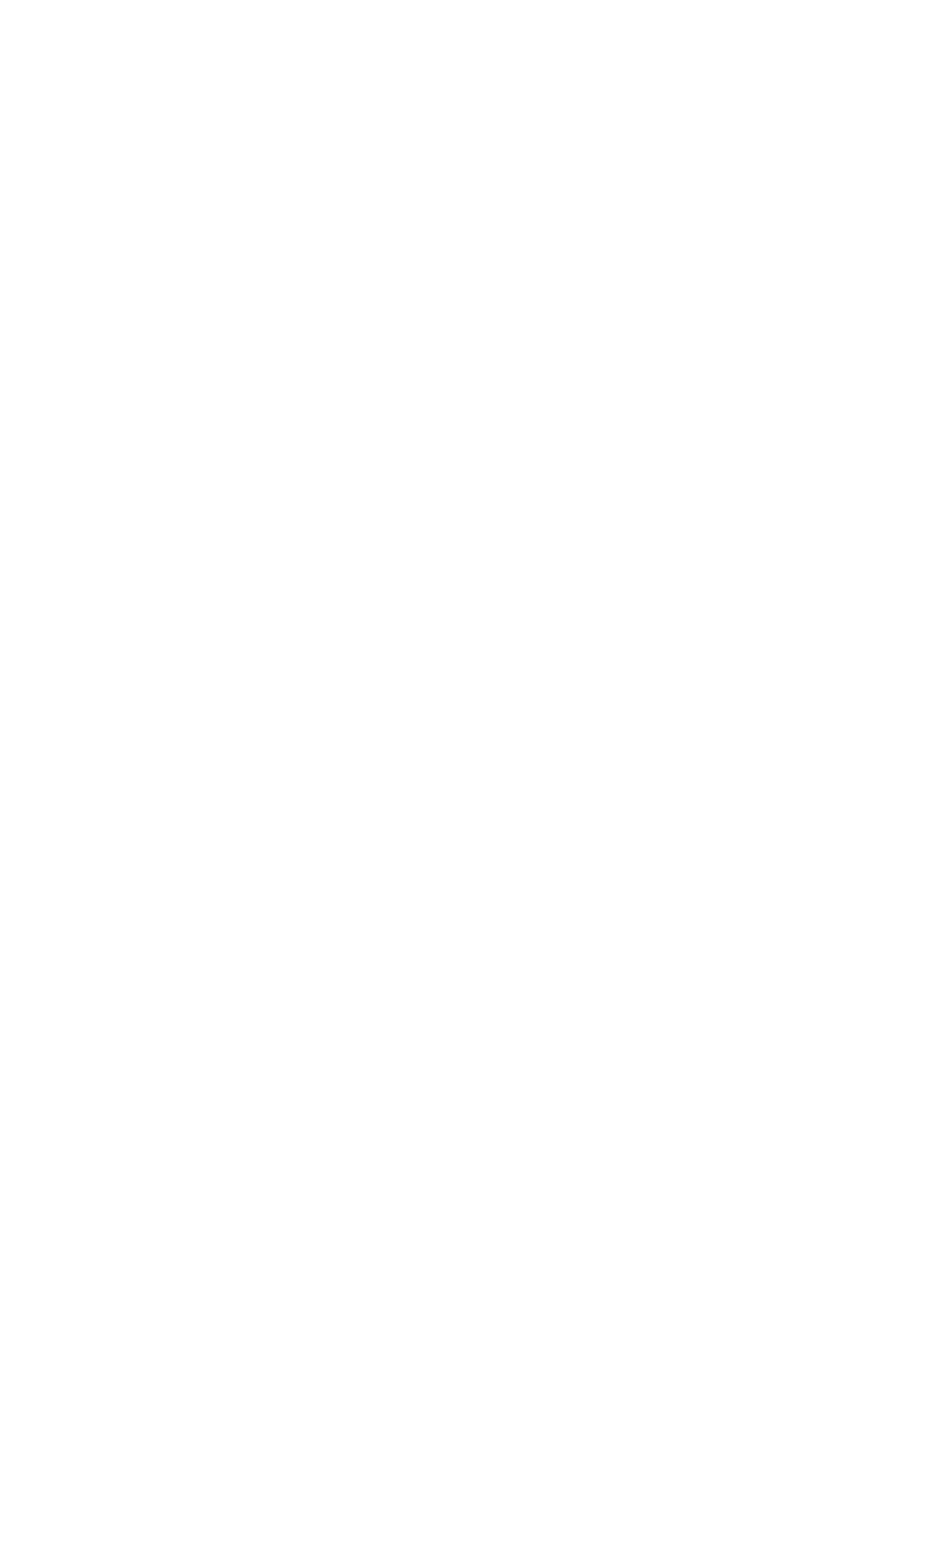 HomeBiogas logo for dark backgrounds (transparent PNG)